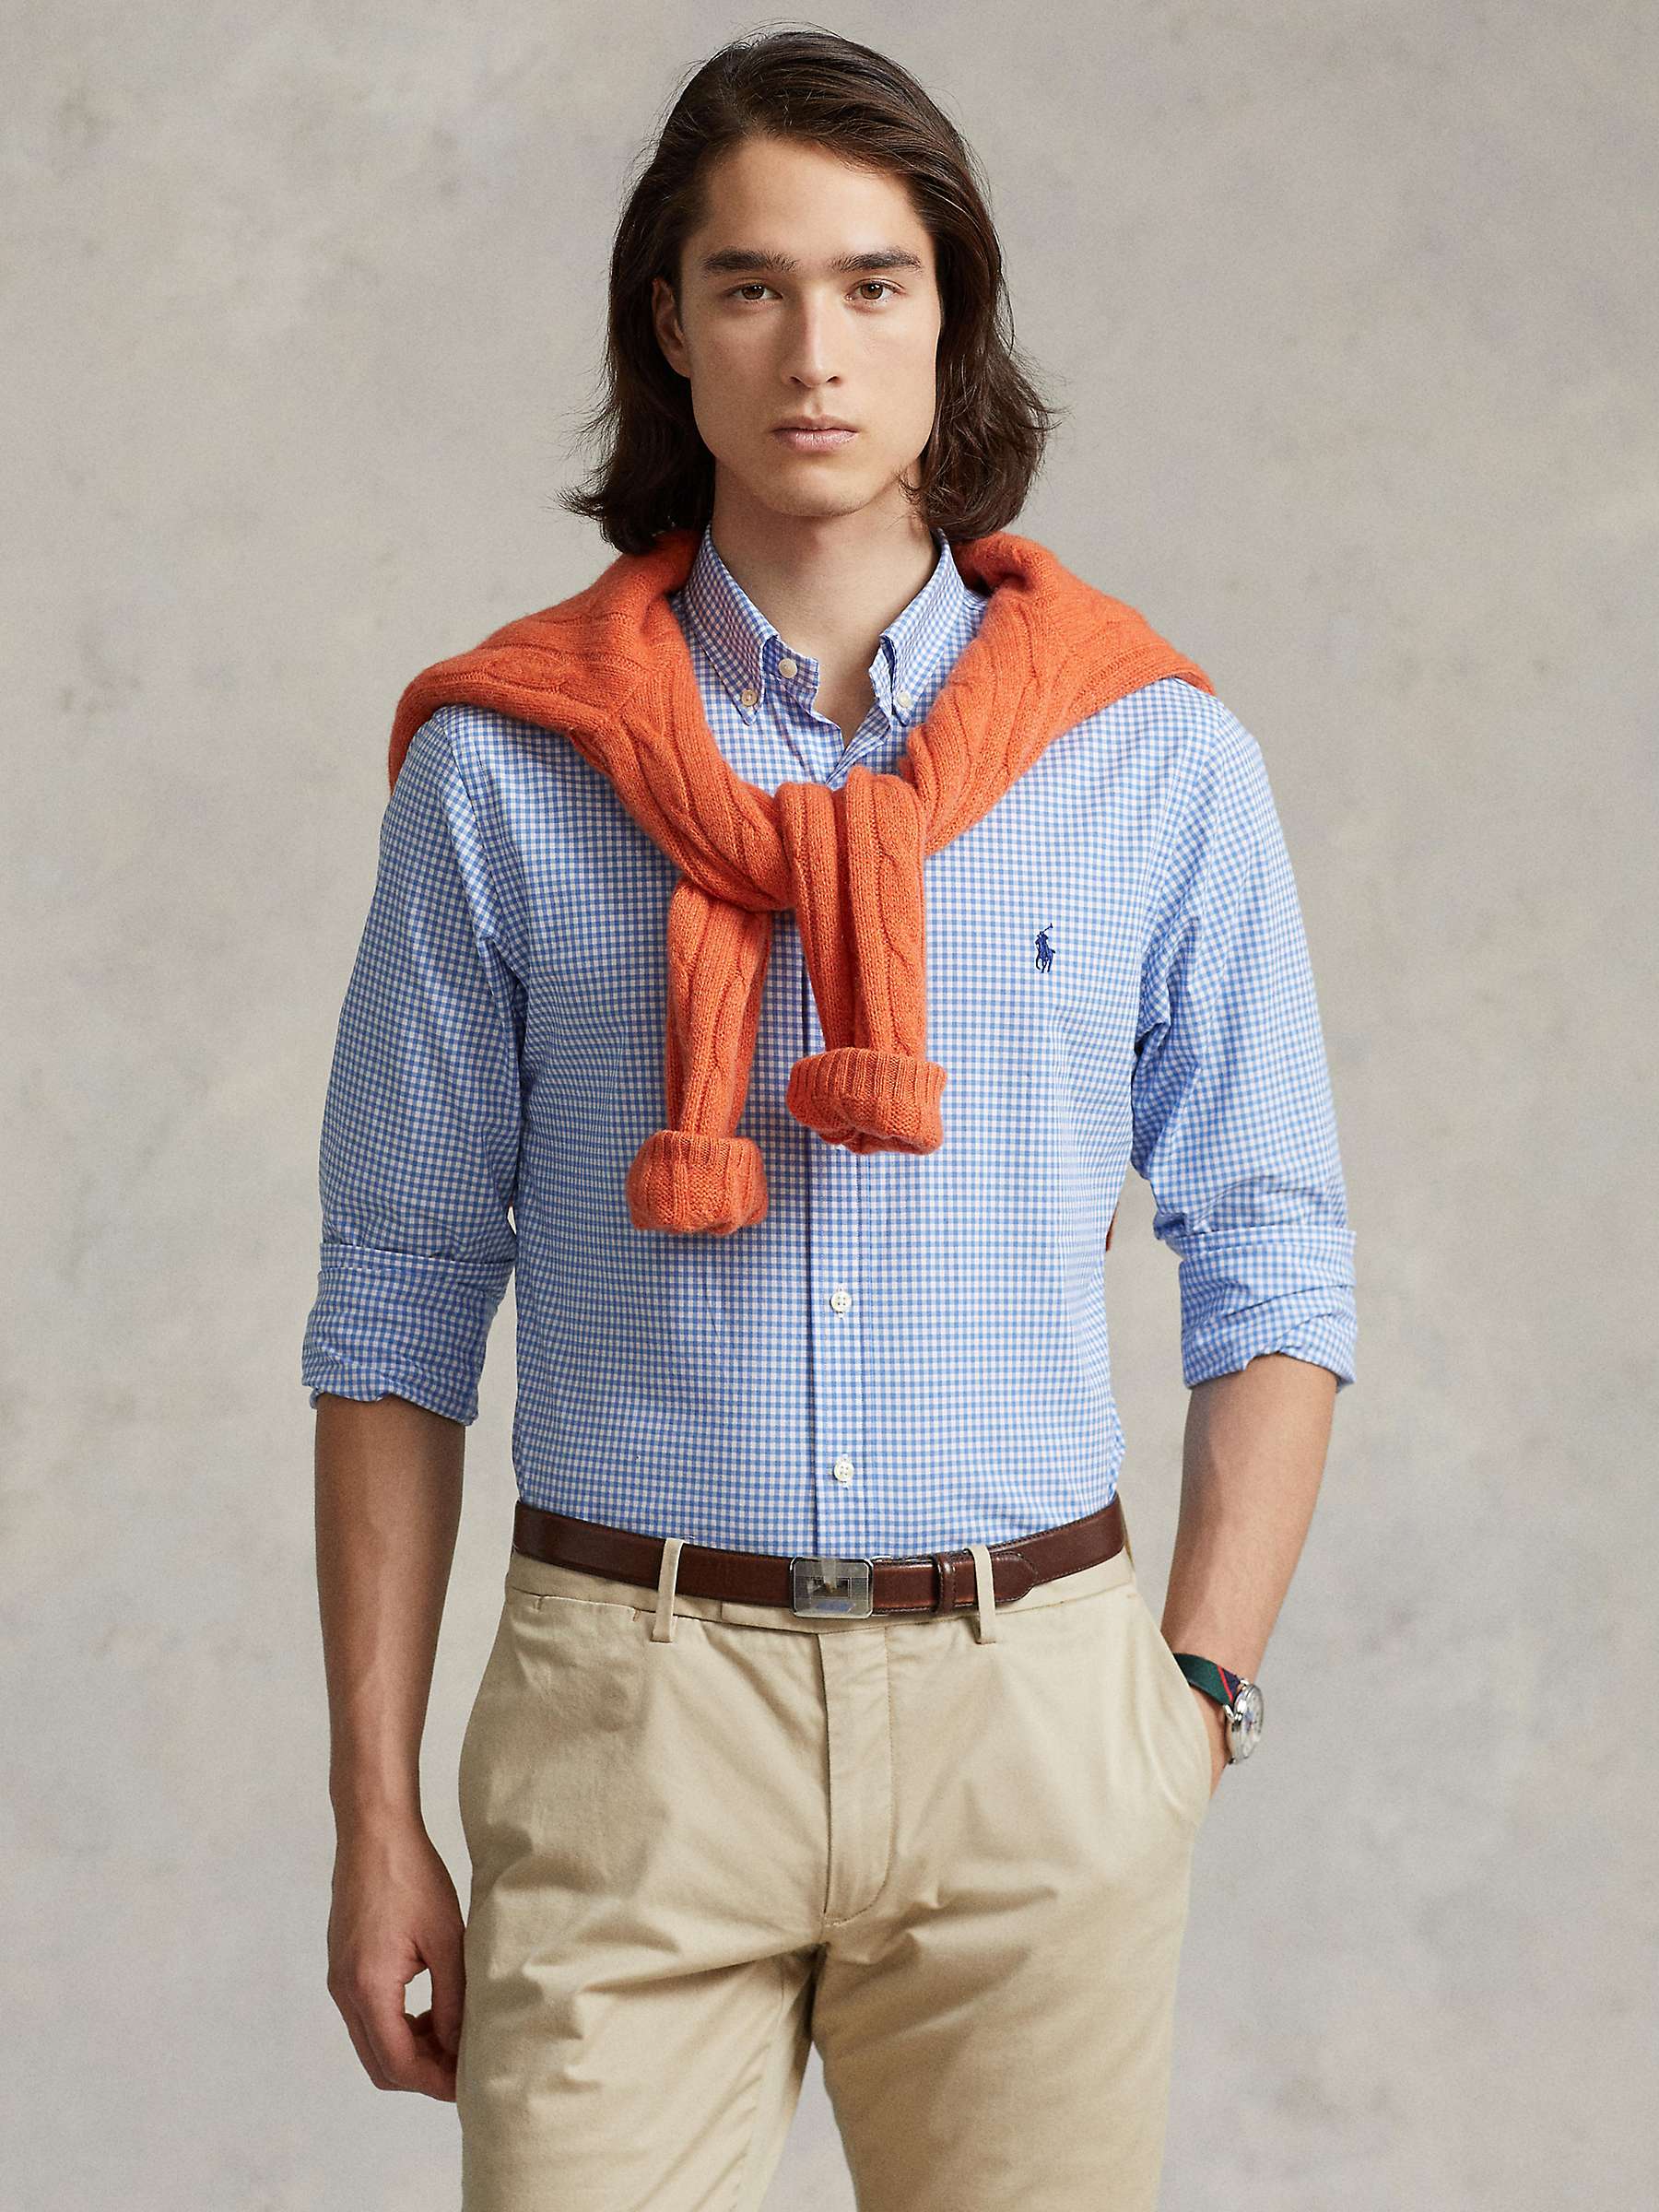 Buy Polo Ralph Lauren Custom Fit Checked Stretch Poplin Shirt, Blue Online at johnlewis.com